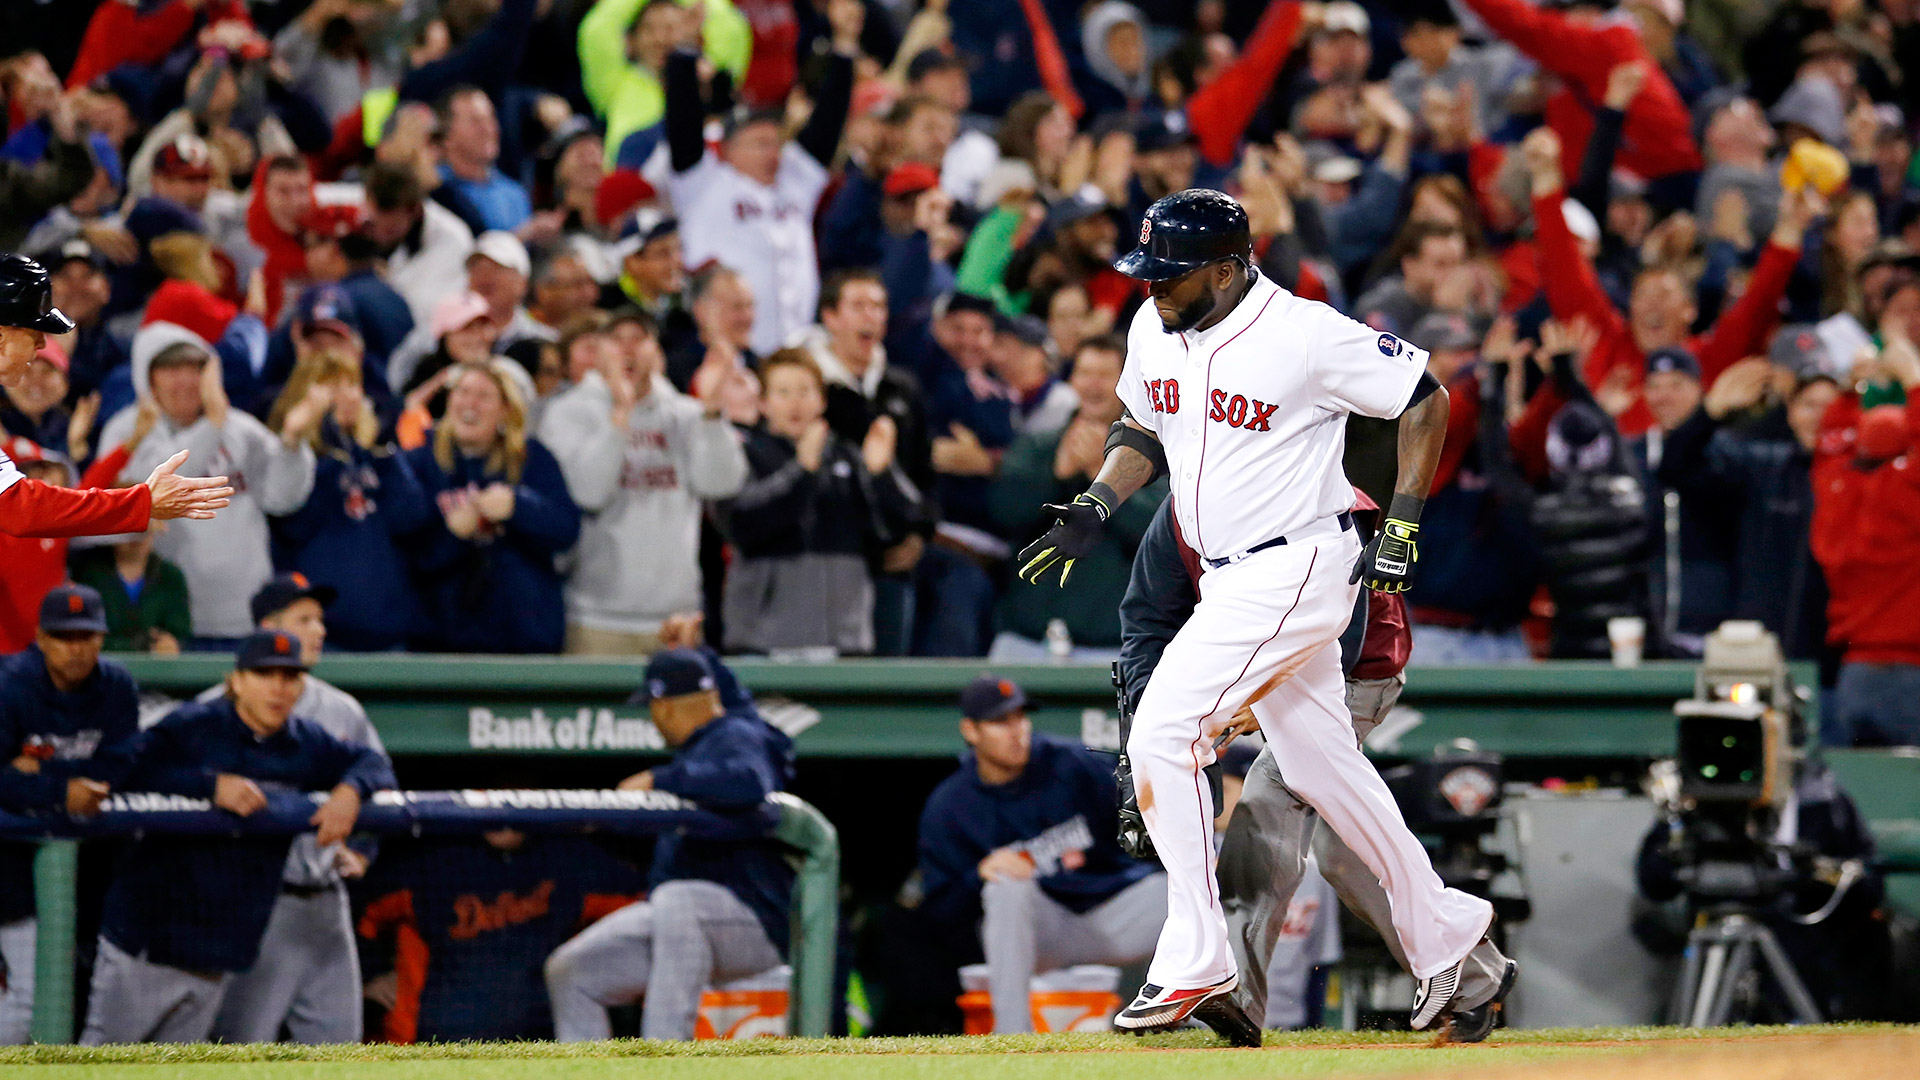 Nomar Garciaparra's two grand slams lead Red Sox - The Boston Globe